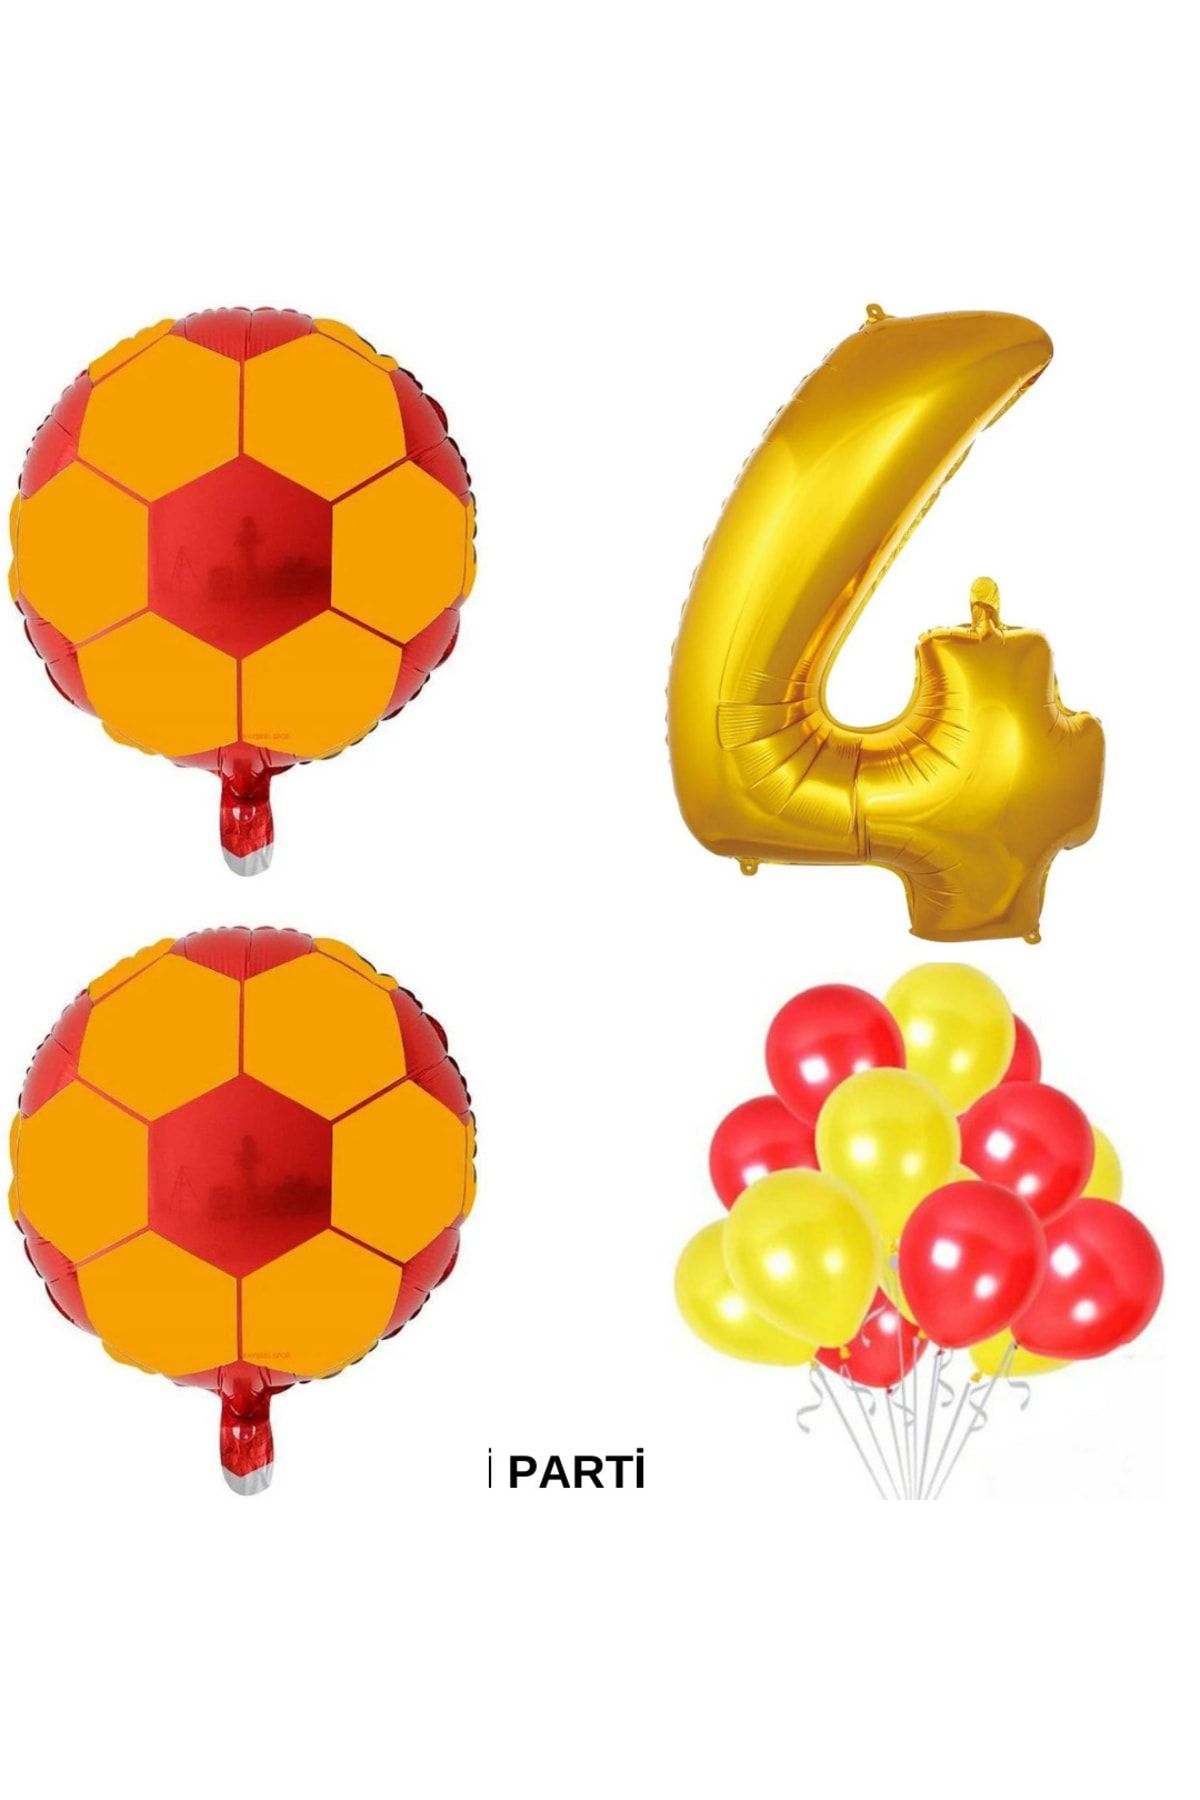 MERİ PARTİ Galatasaray Temalı Doğum Günü Parti Seti Yaş Balonu Sarı Kırmızı Balon Galatasaray Set